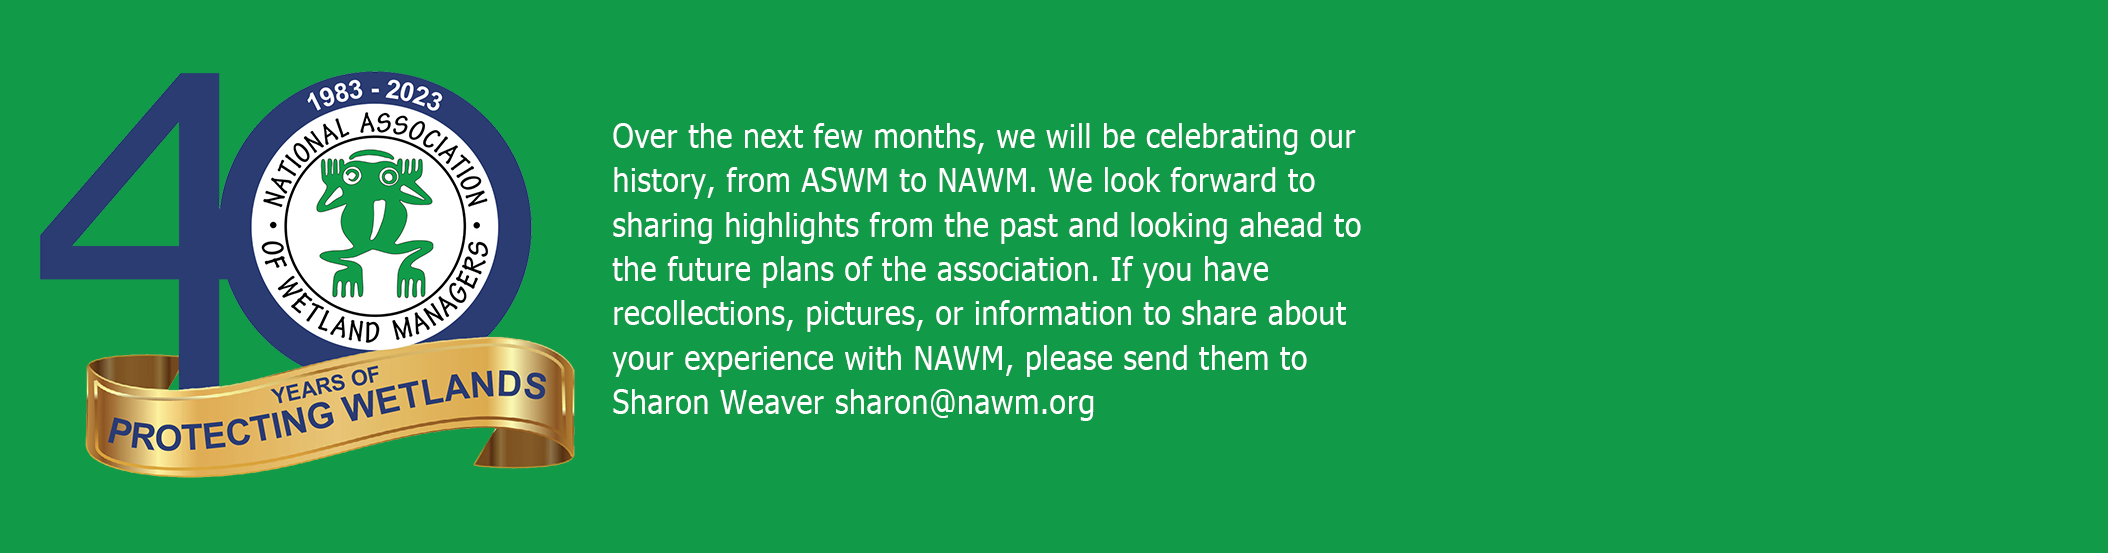 Celebrating NAWM's 40th Anniversary 